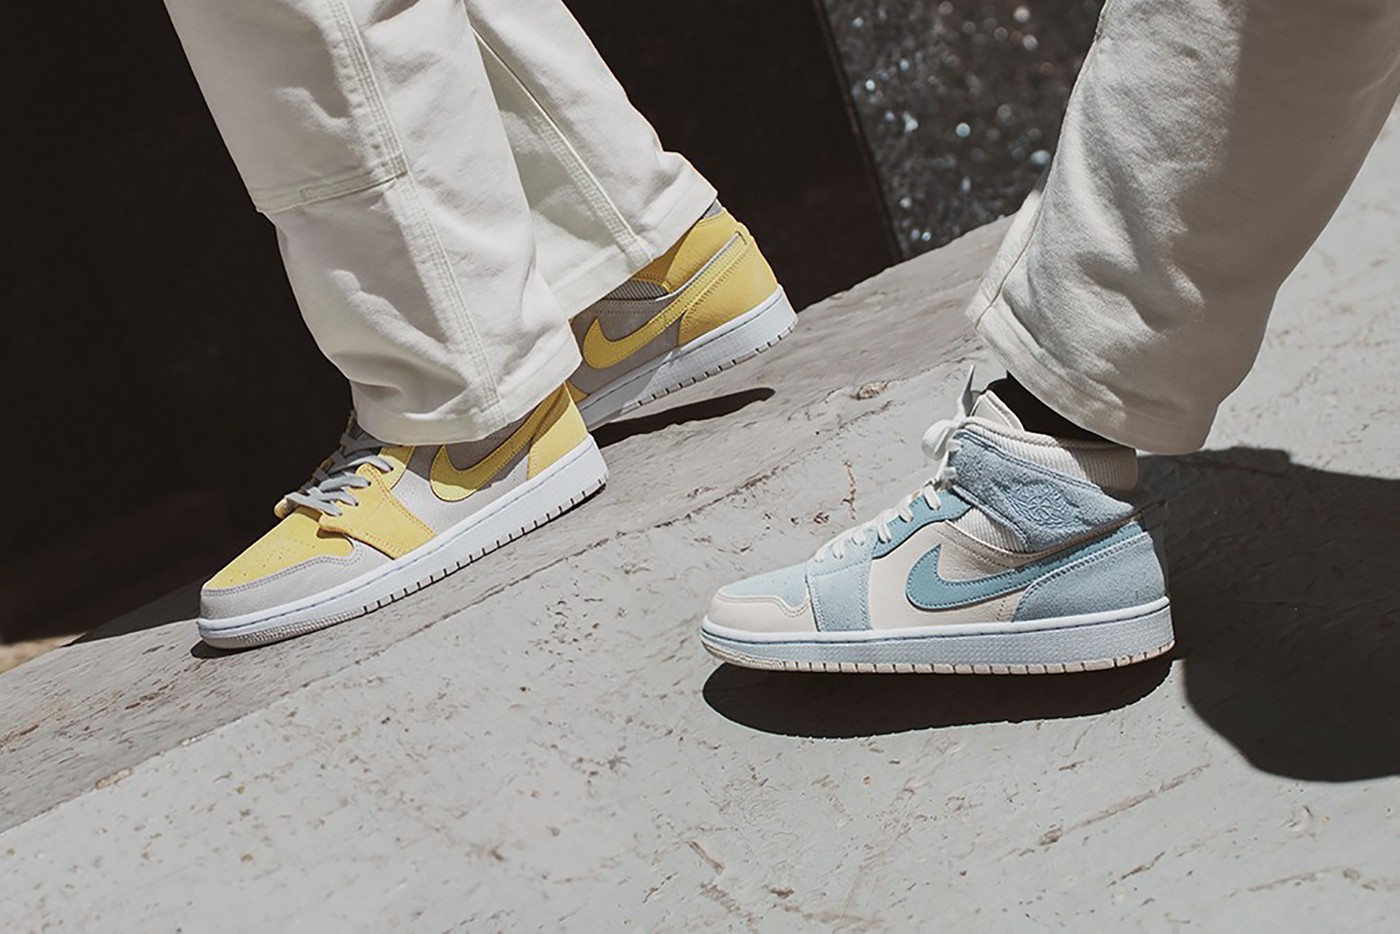 nike air Jordan 1 mid se sneakers pastel blue yellow white grey colorway raffle release info